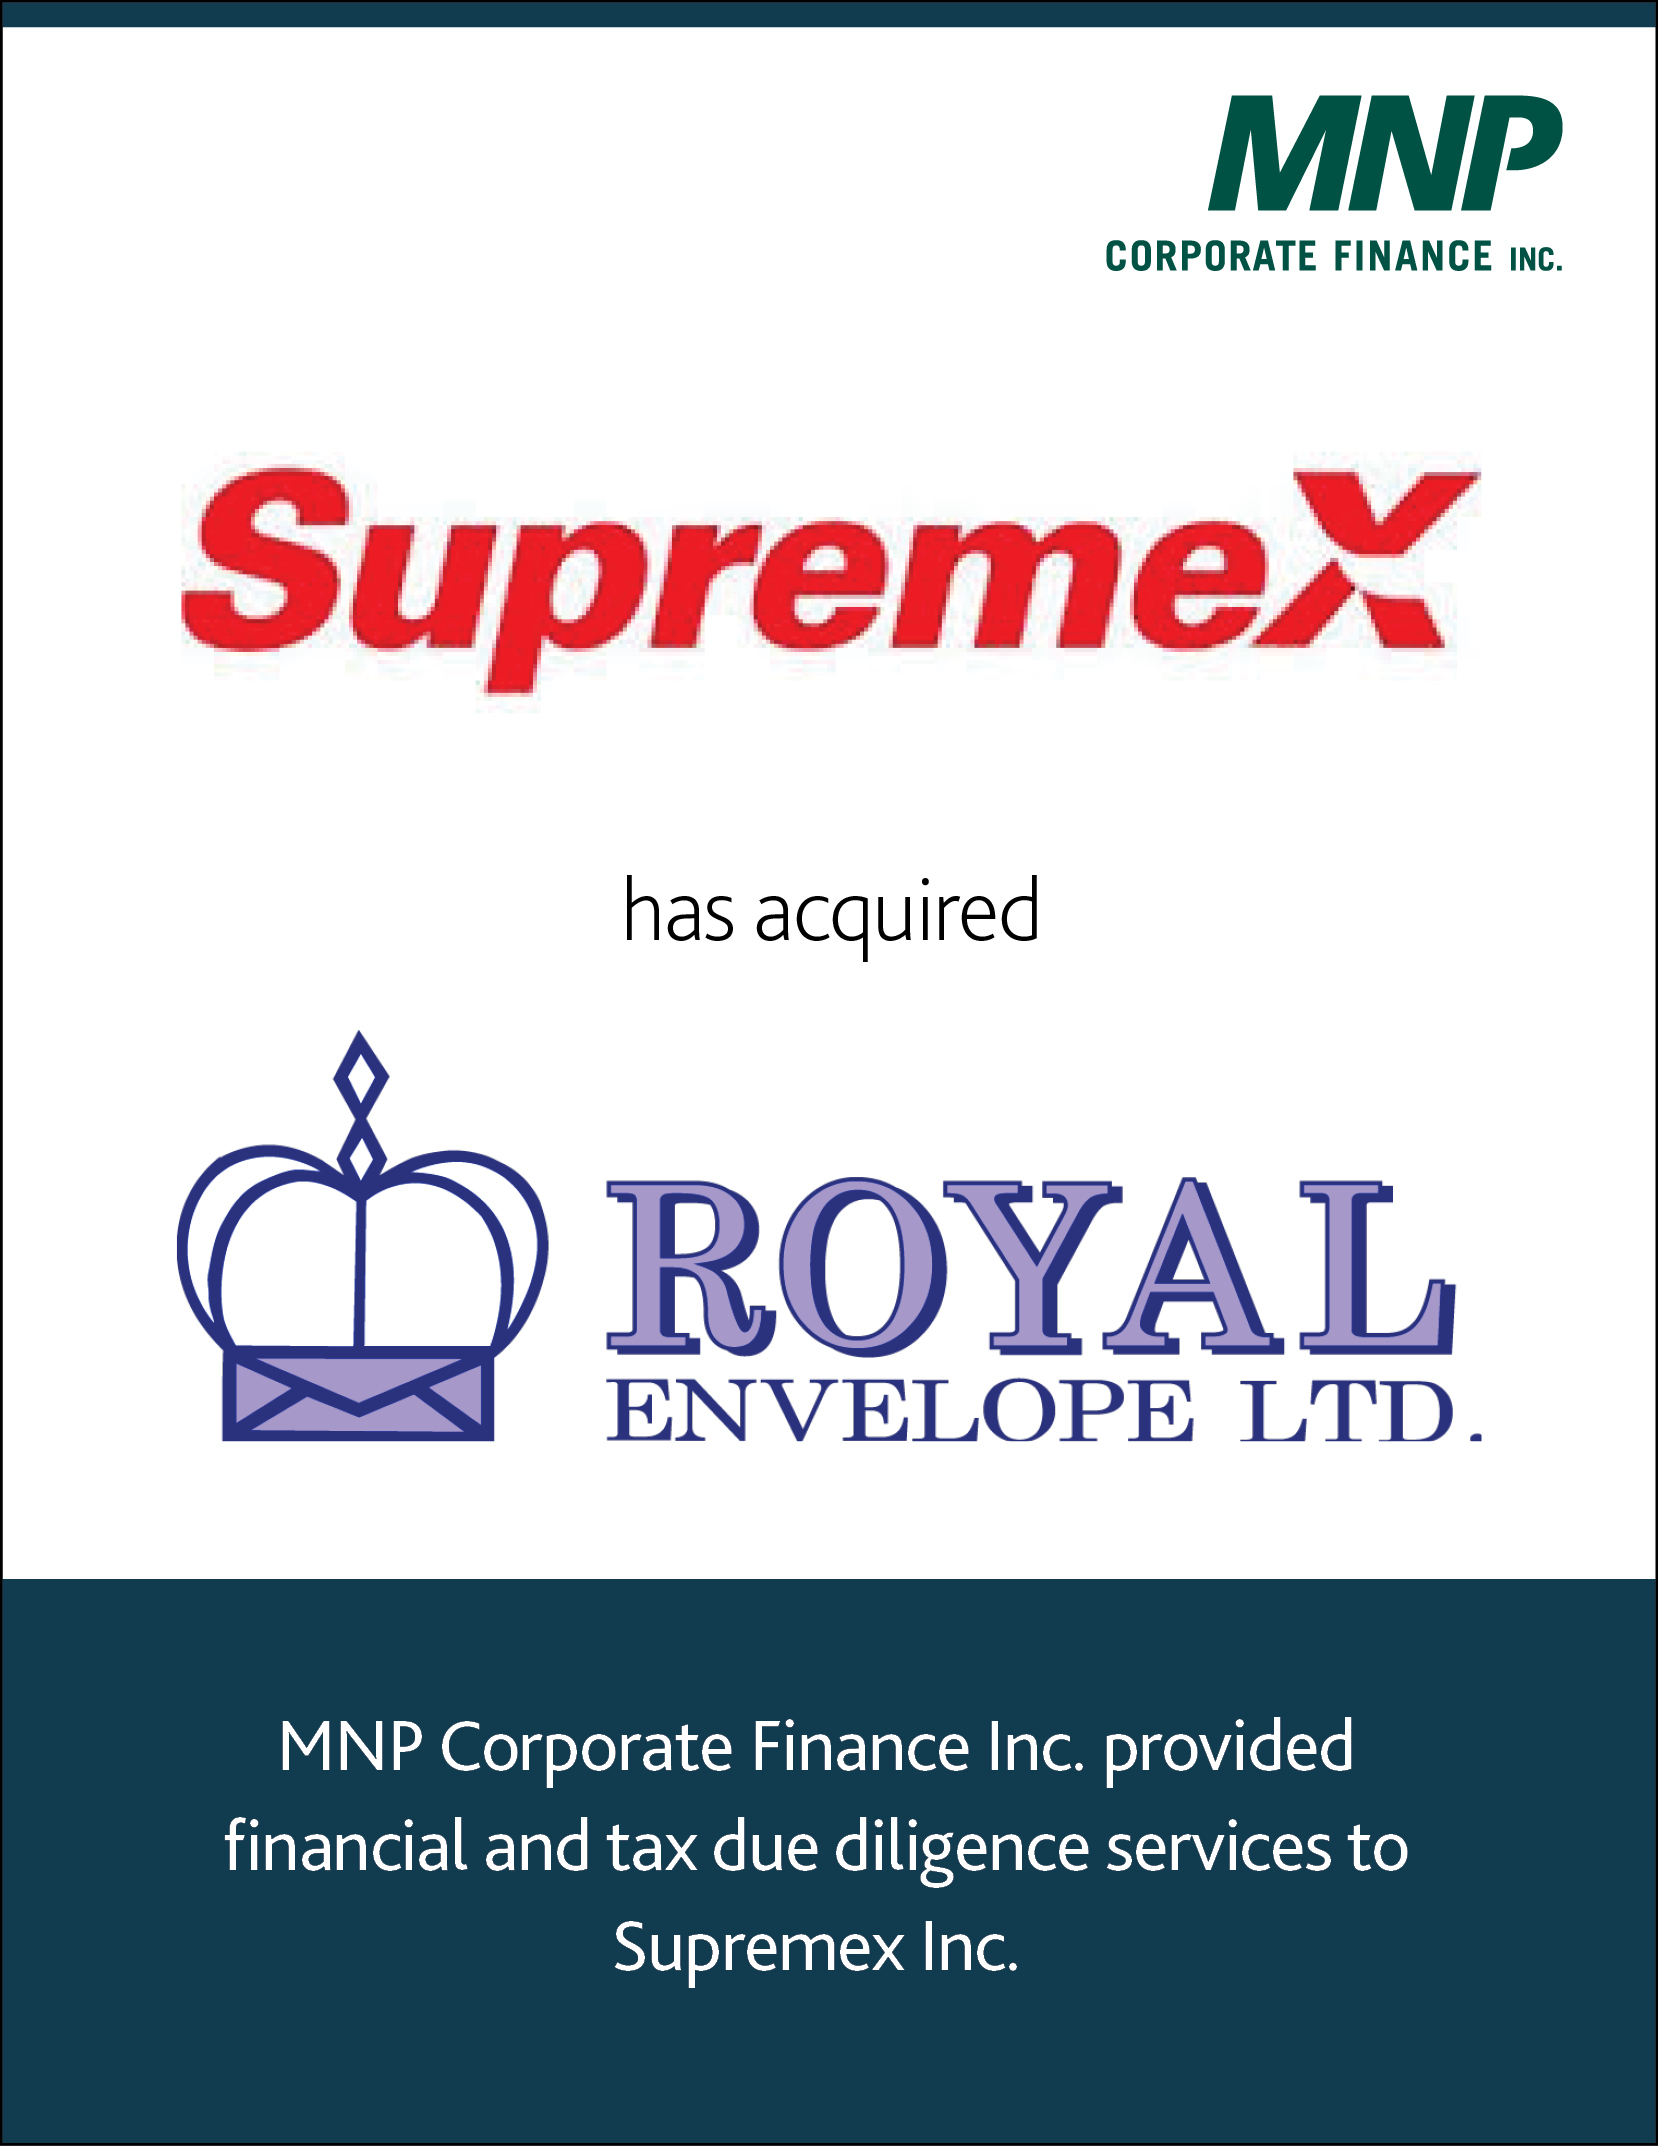 SupremeX has acquired Royal Envelope Ltd